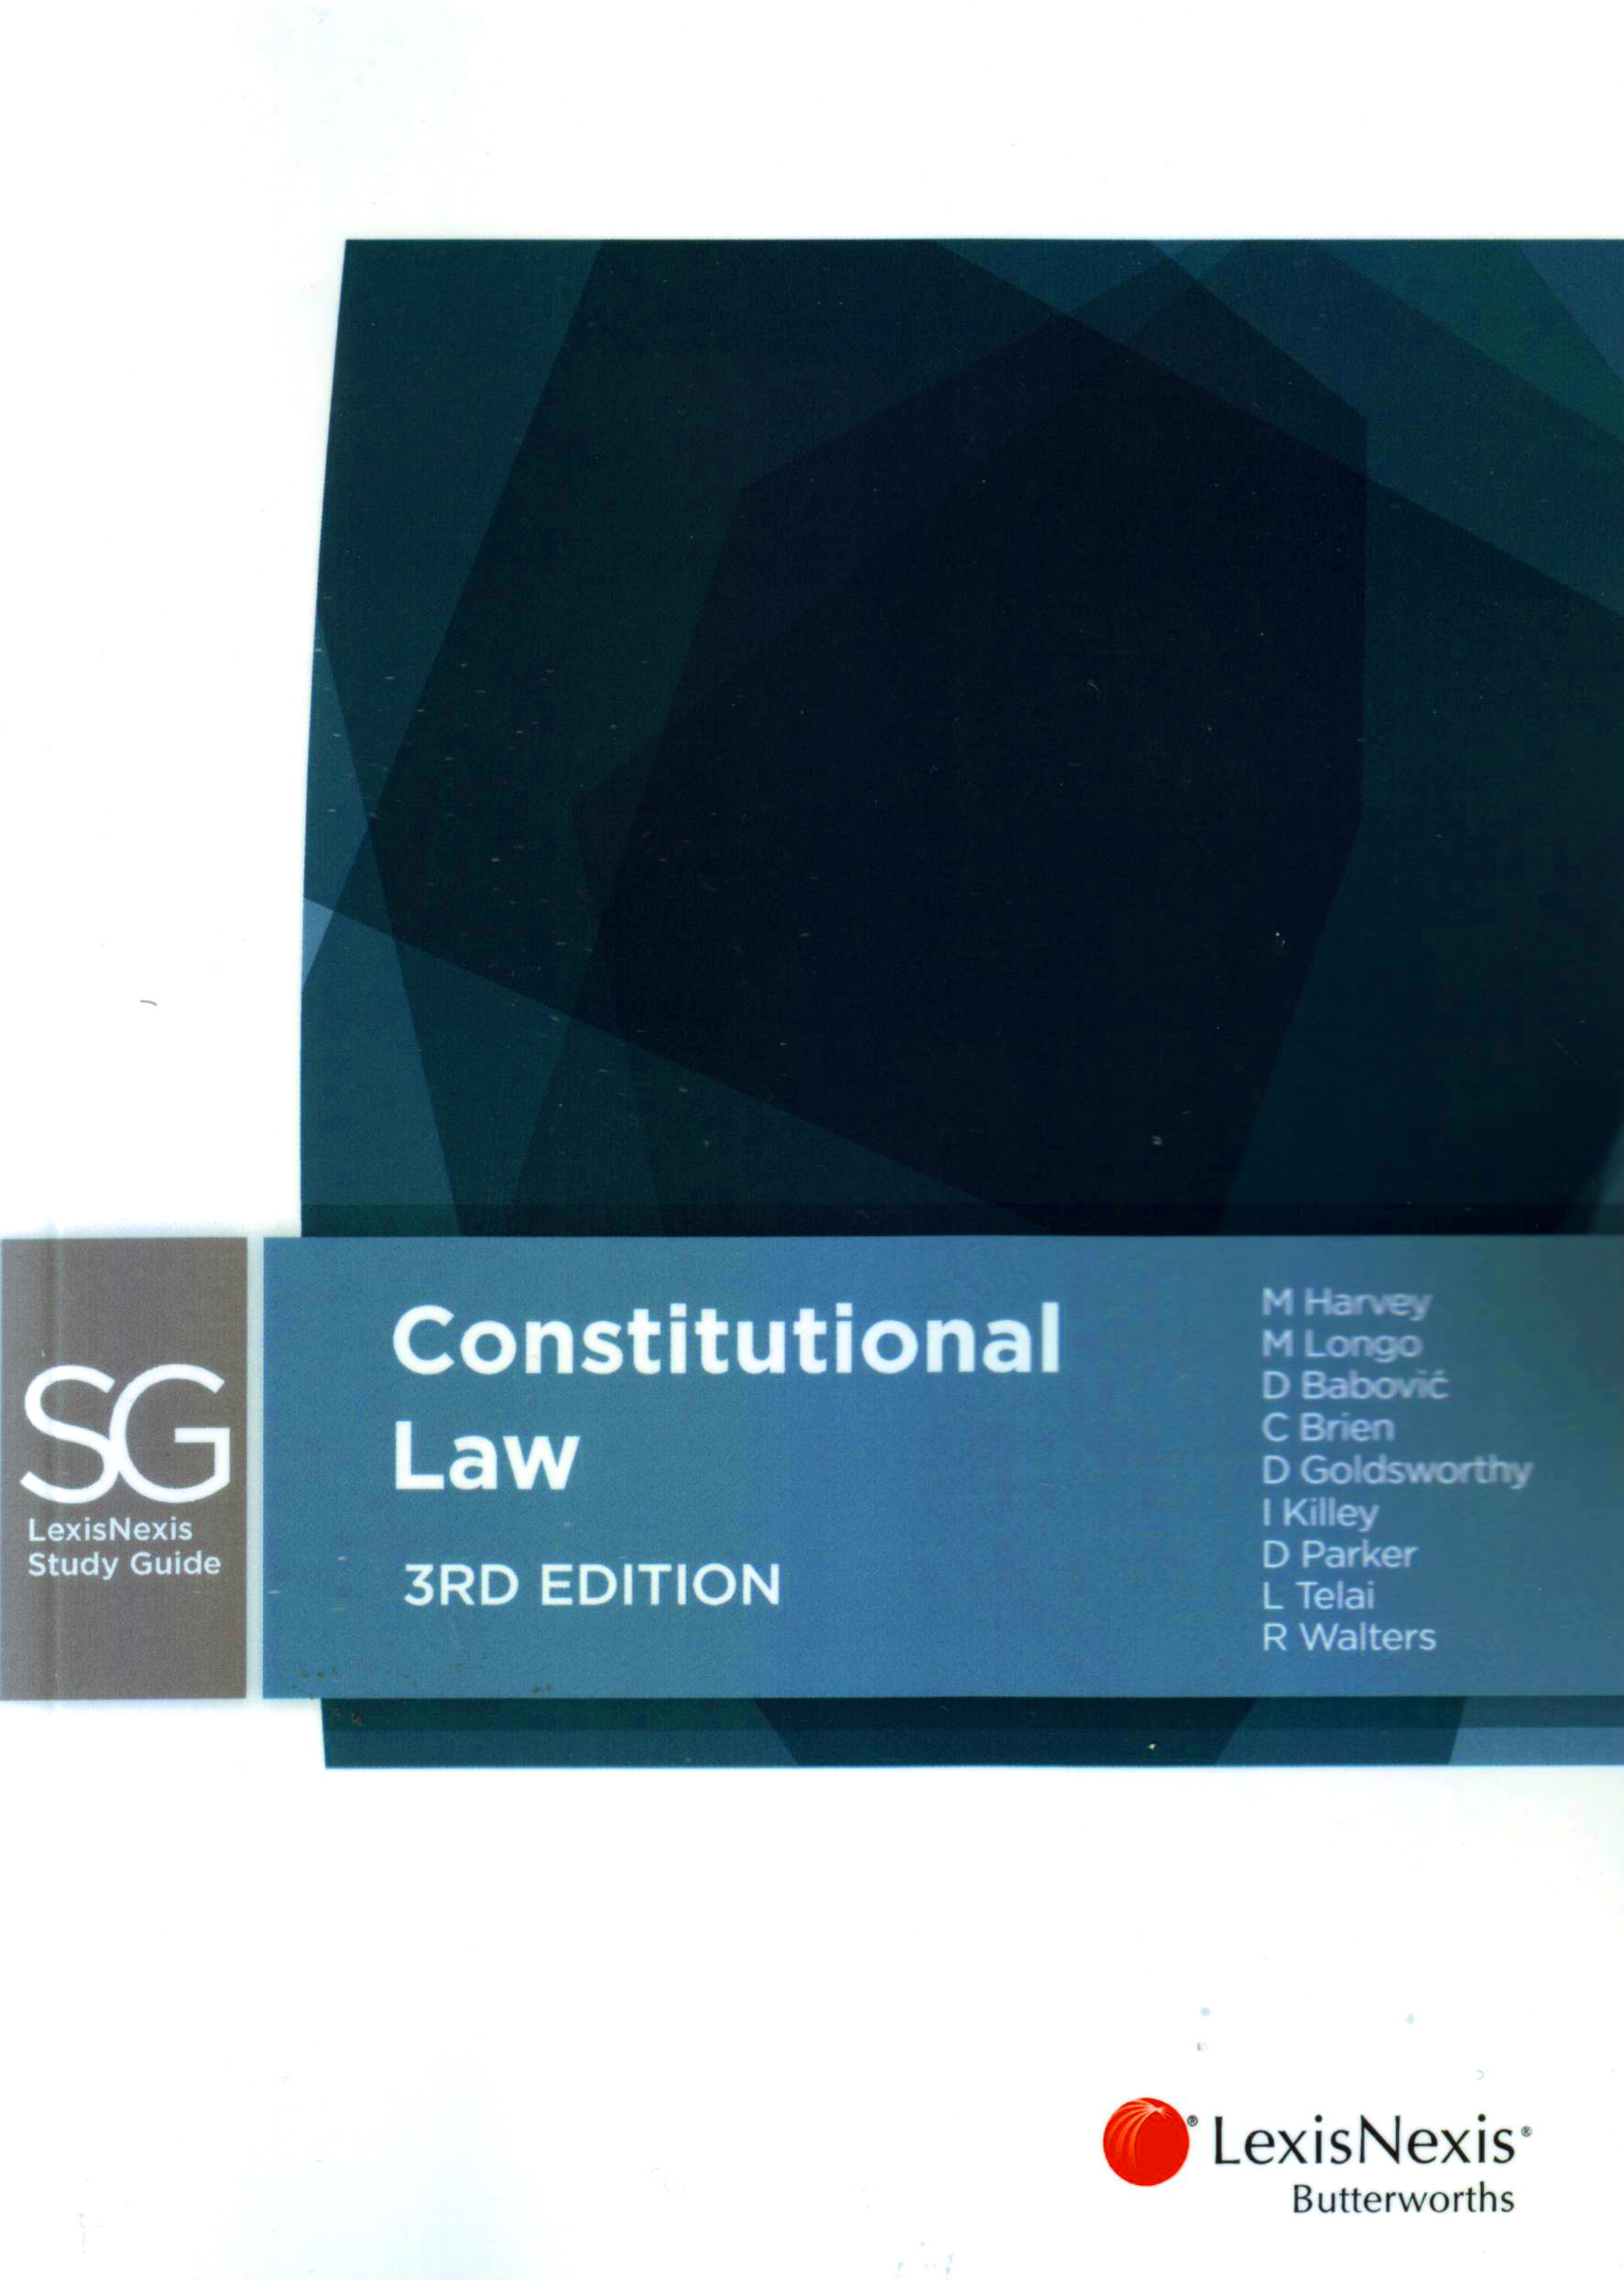 LexisNexis Study Guide: Constitutional Law e3